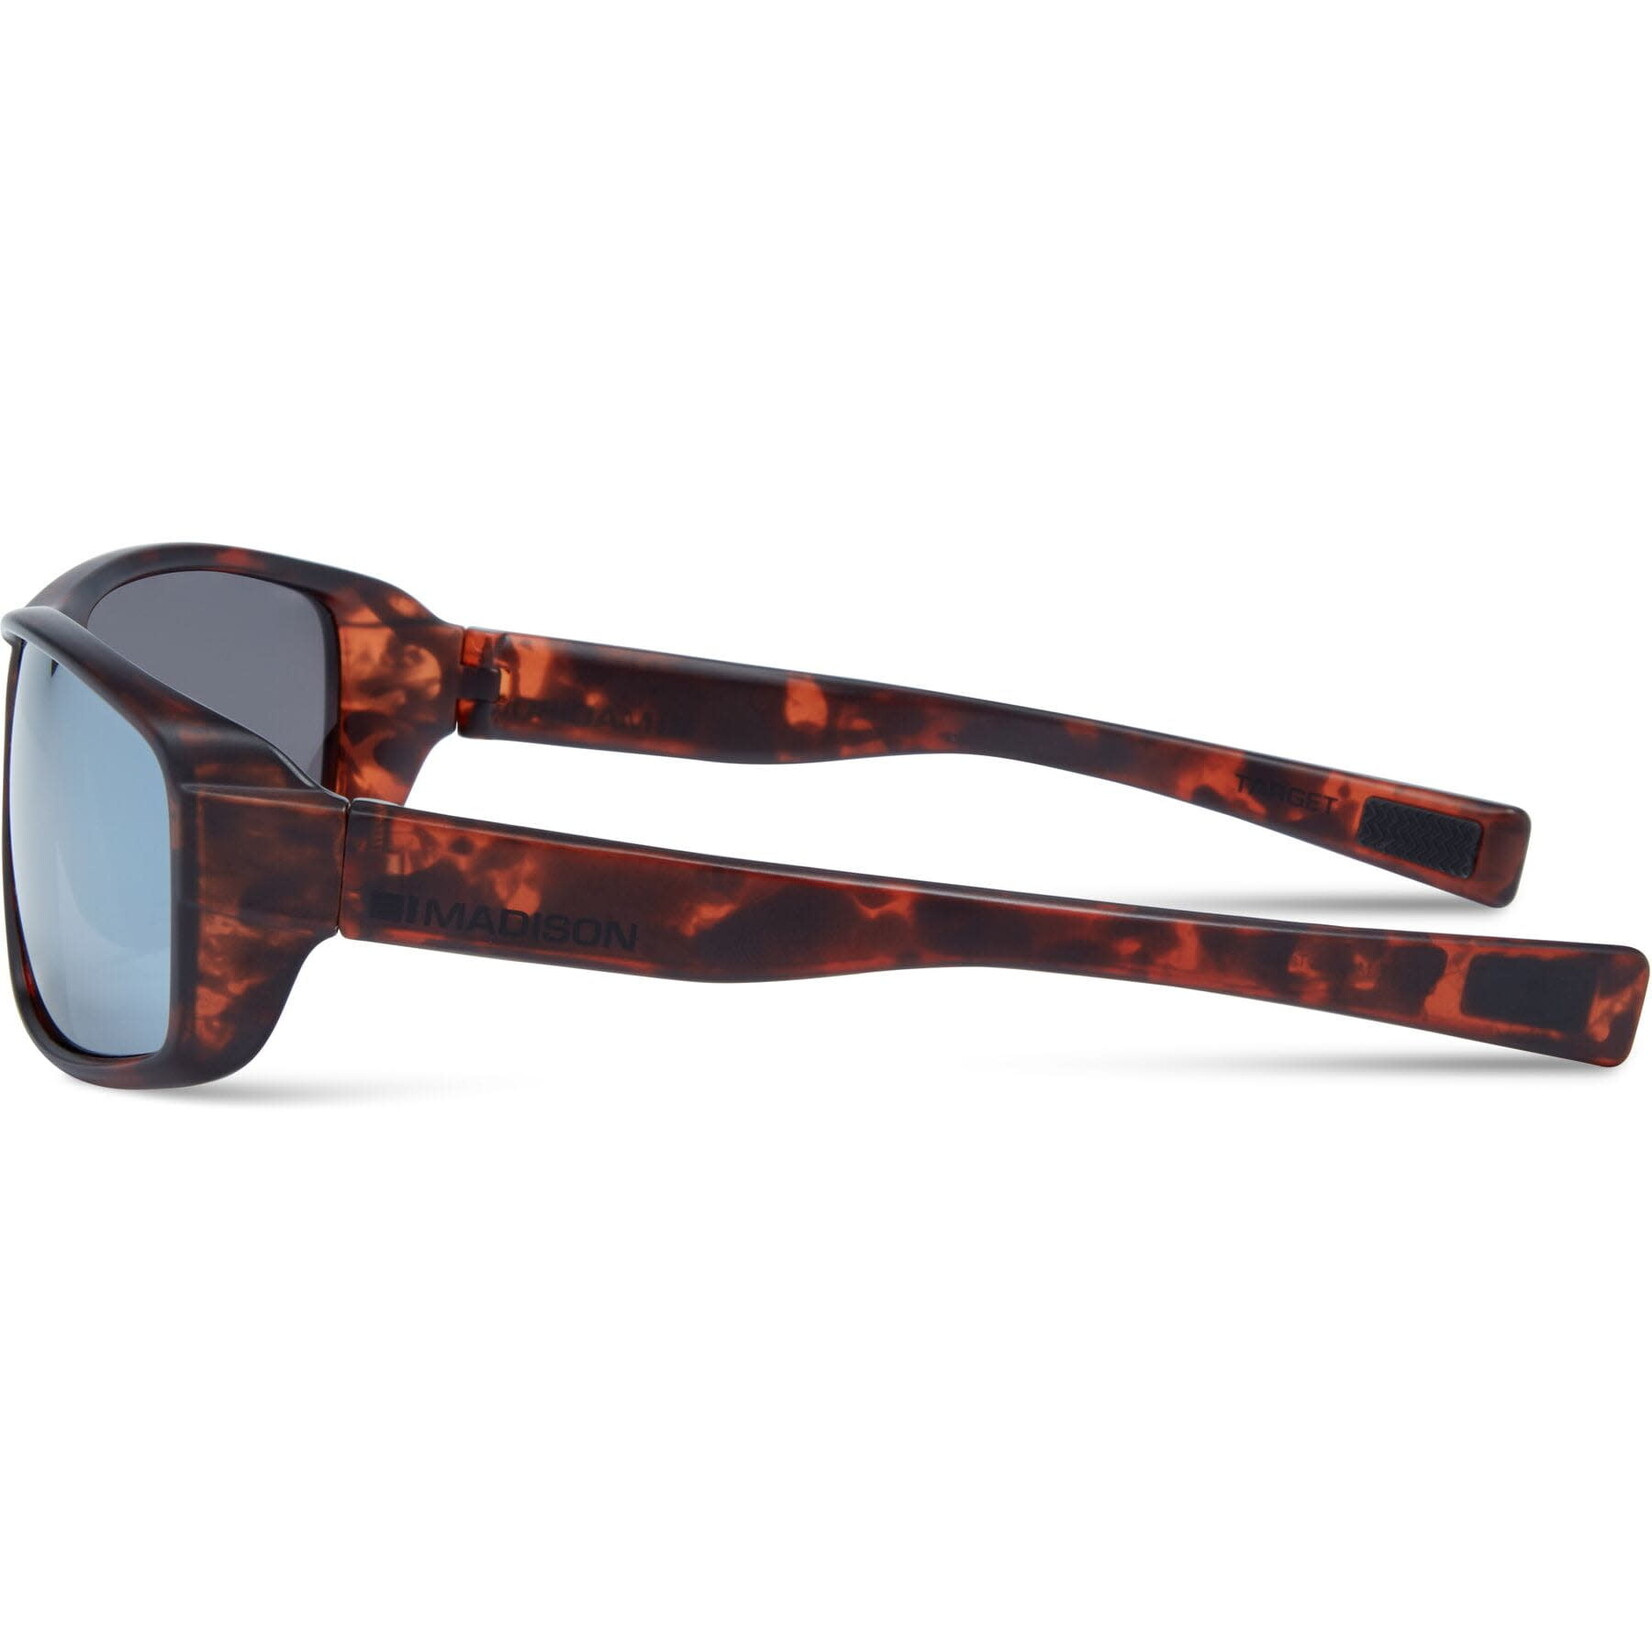 Madison Madison Target Sunglasses - brown tortoiseshell / silver mirror